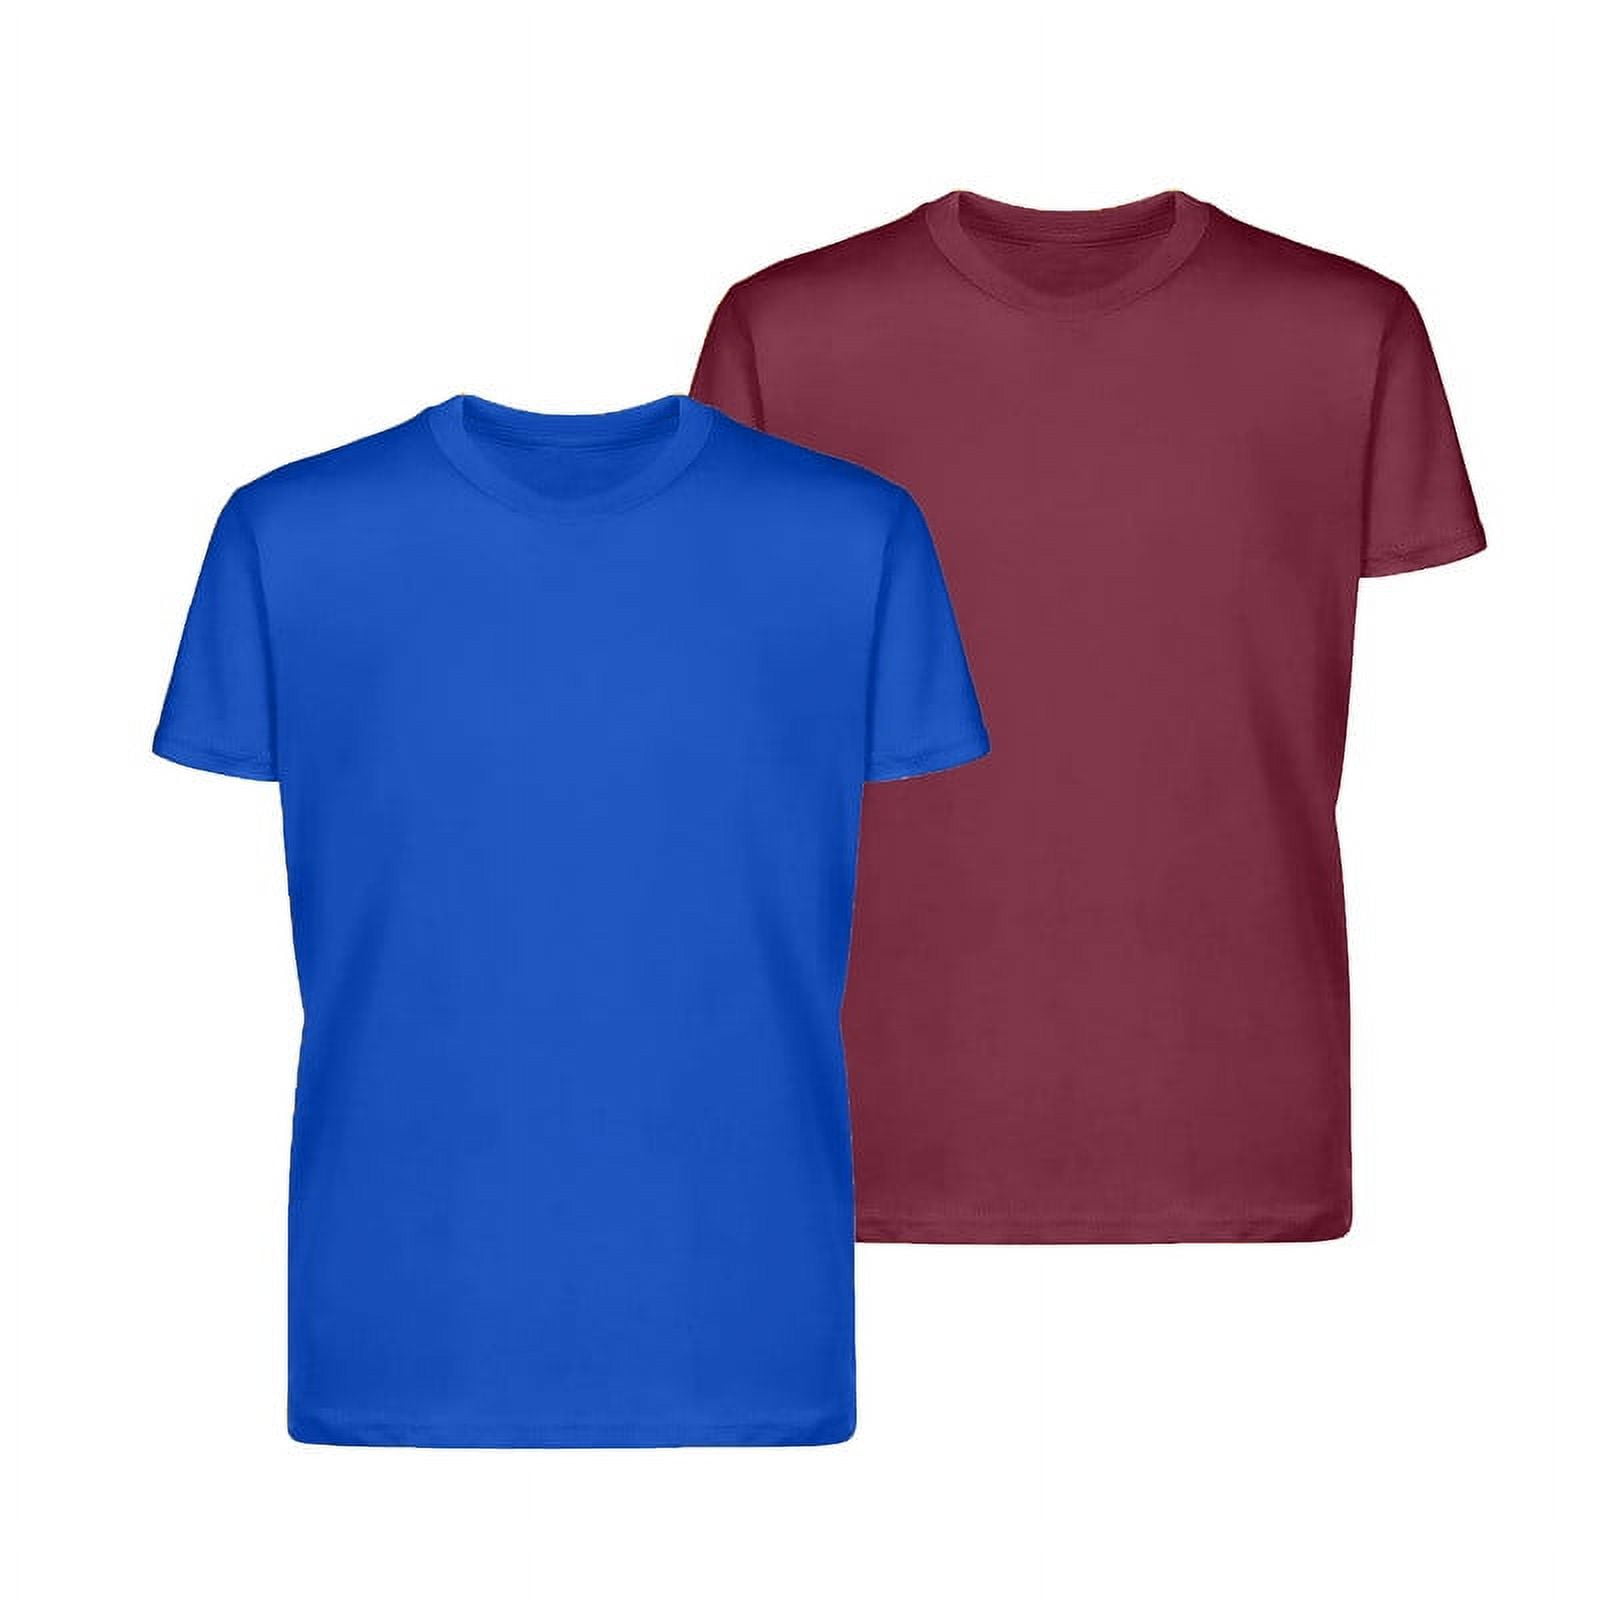 Radyan 2 Pack Youth Premium T-Shirts for School Kids, Half Sleeve Kids  T-Shirts - Tees for kids 